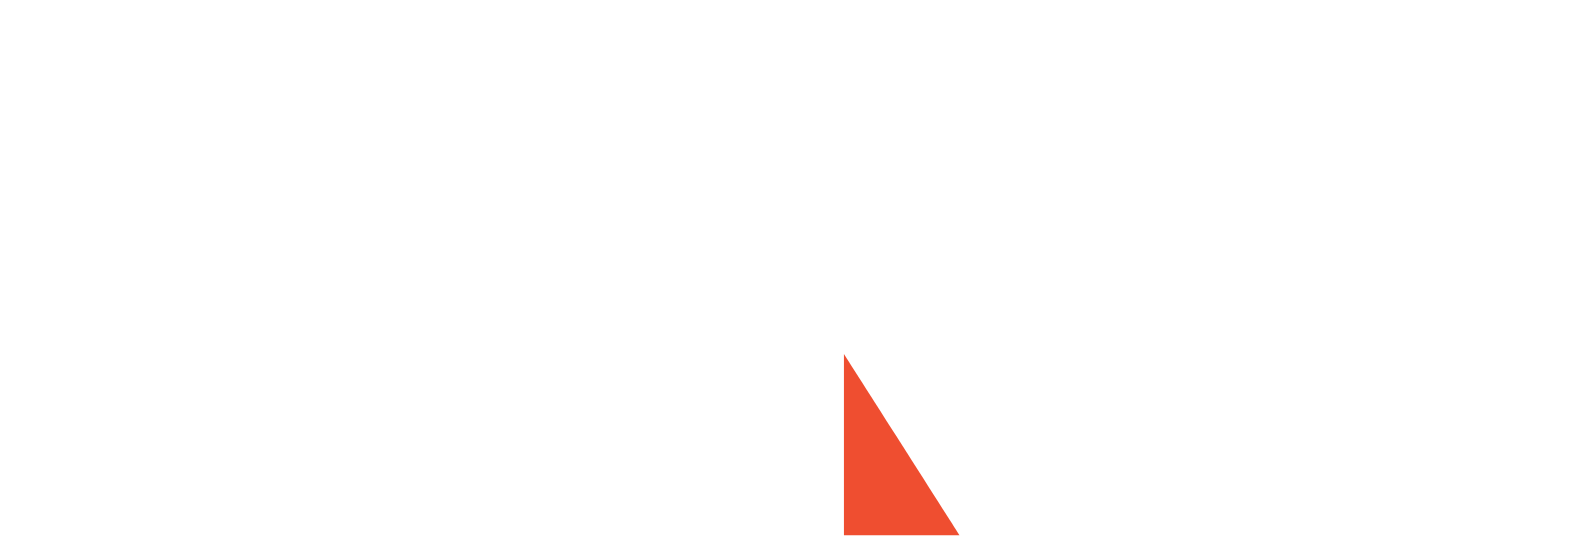 WNS logo for dark backgrounds (transparent PNG)